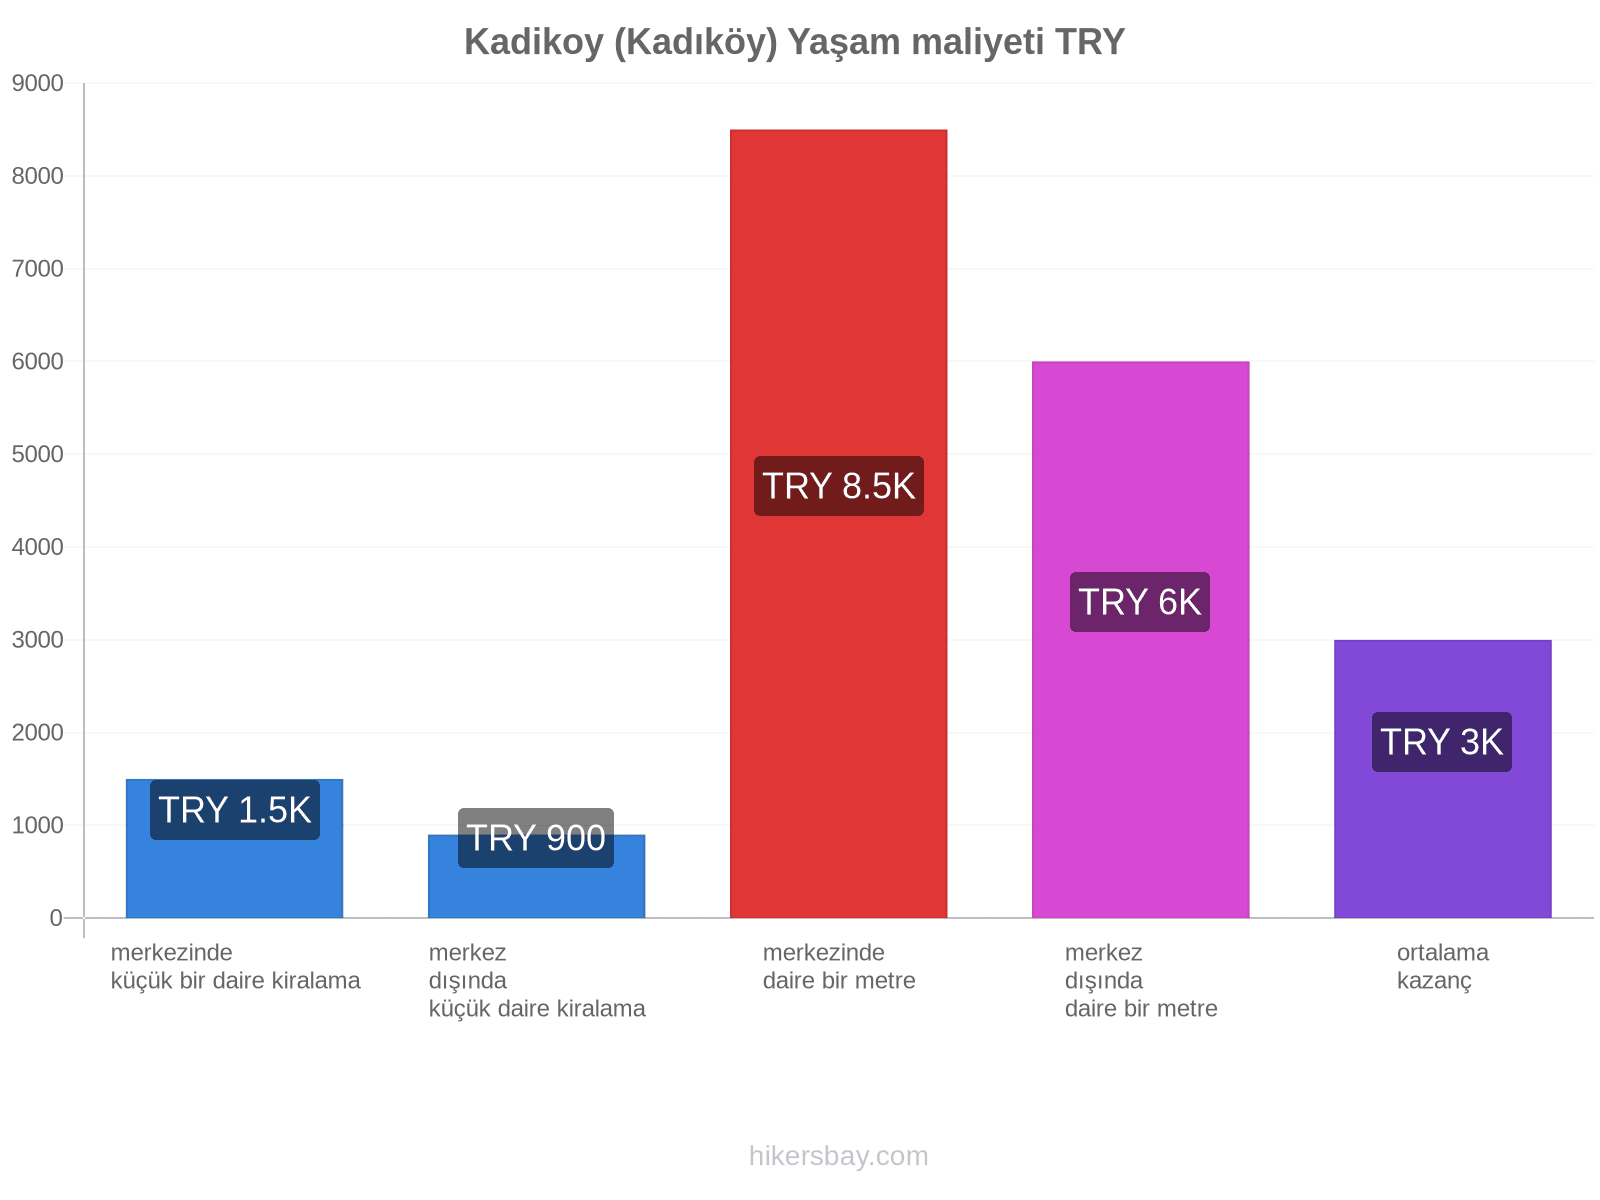 Kadikoy (Kadıköy) yaşam maliyeti hikersbay.com